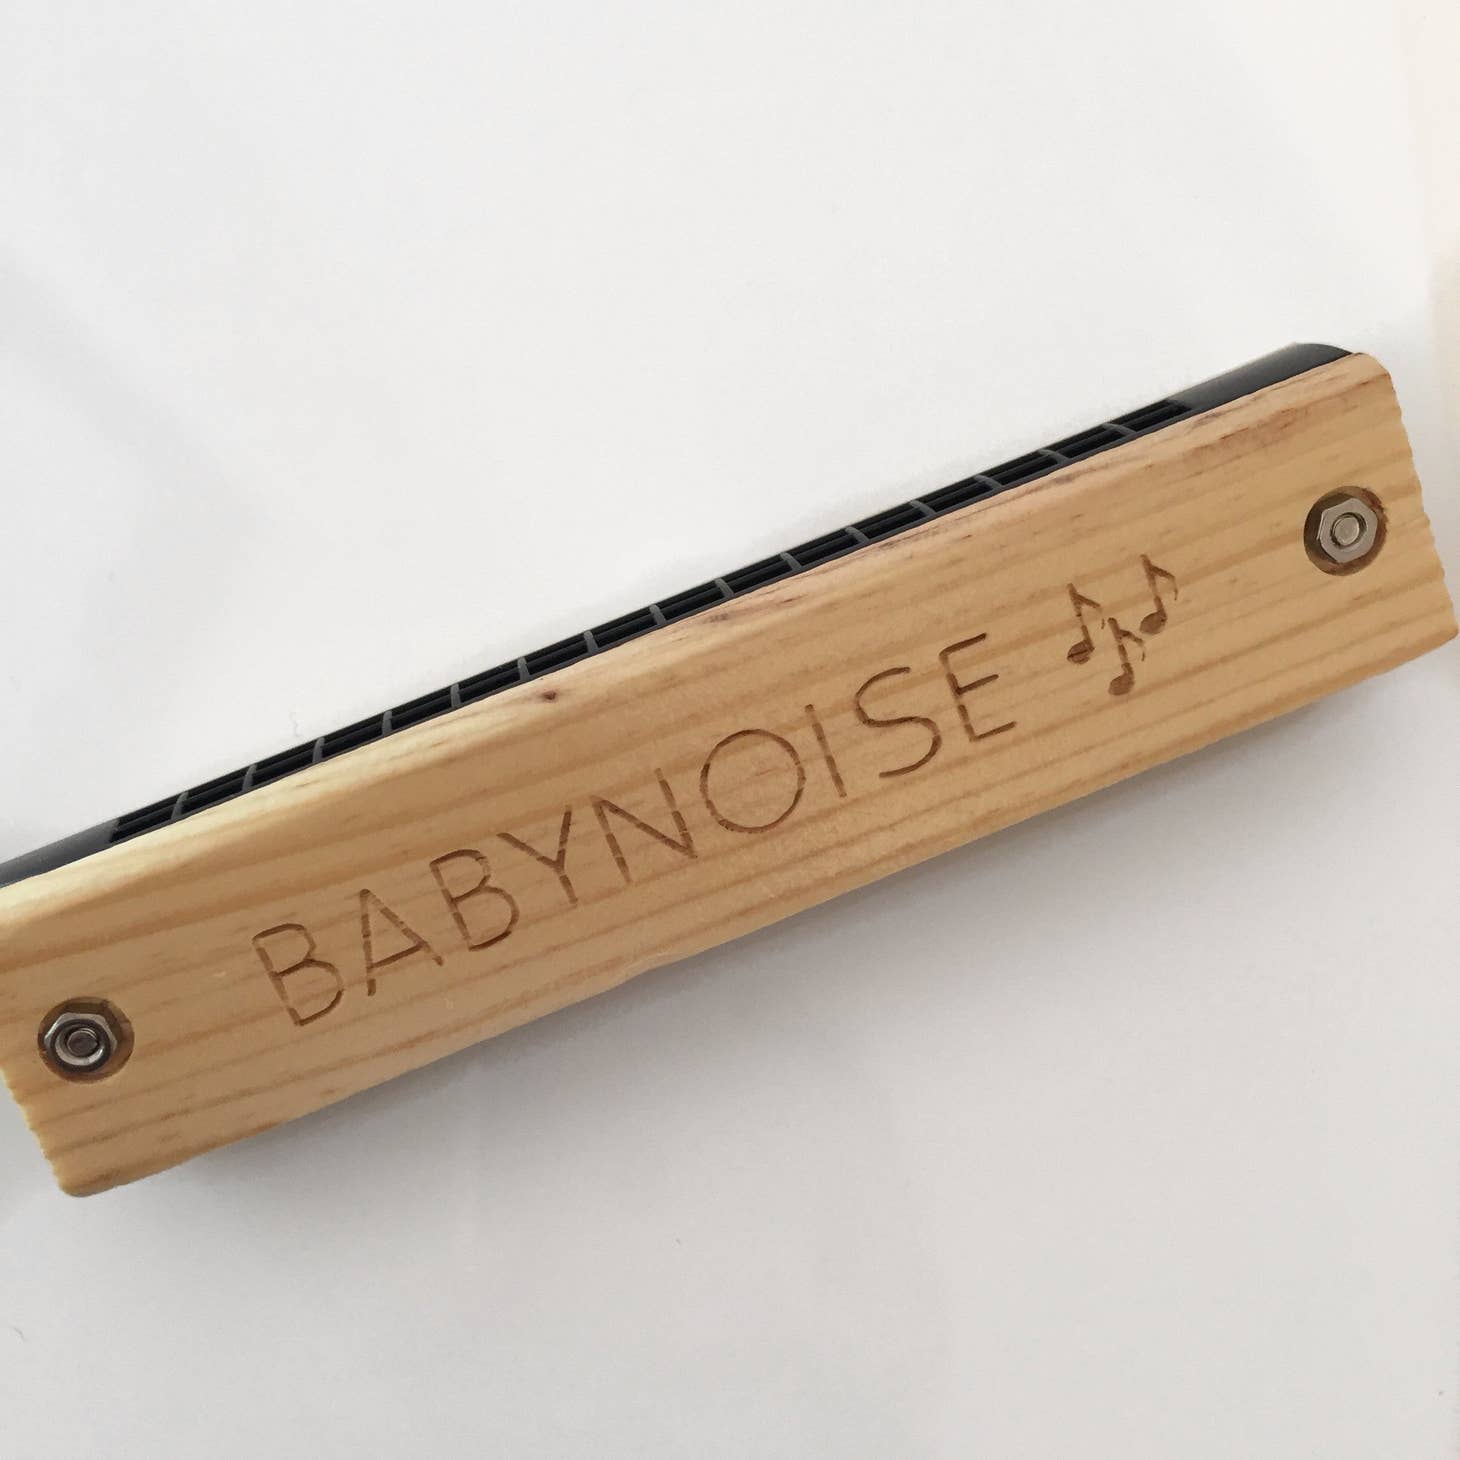 Babynoise Harmonica